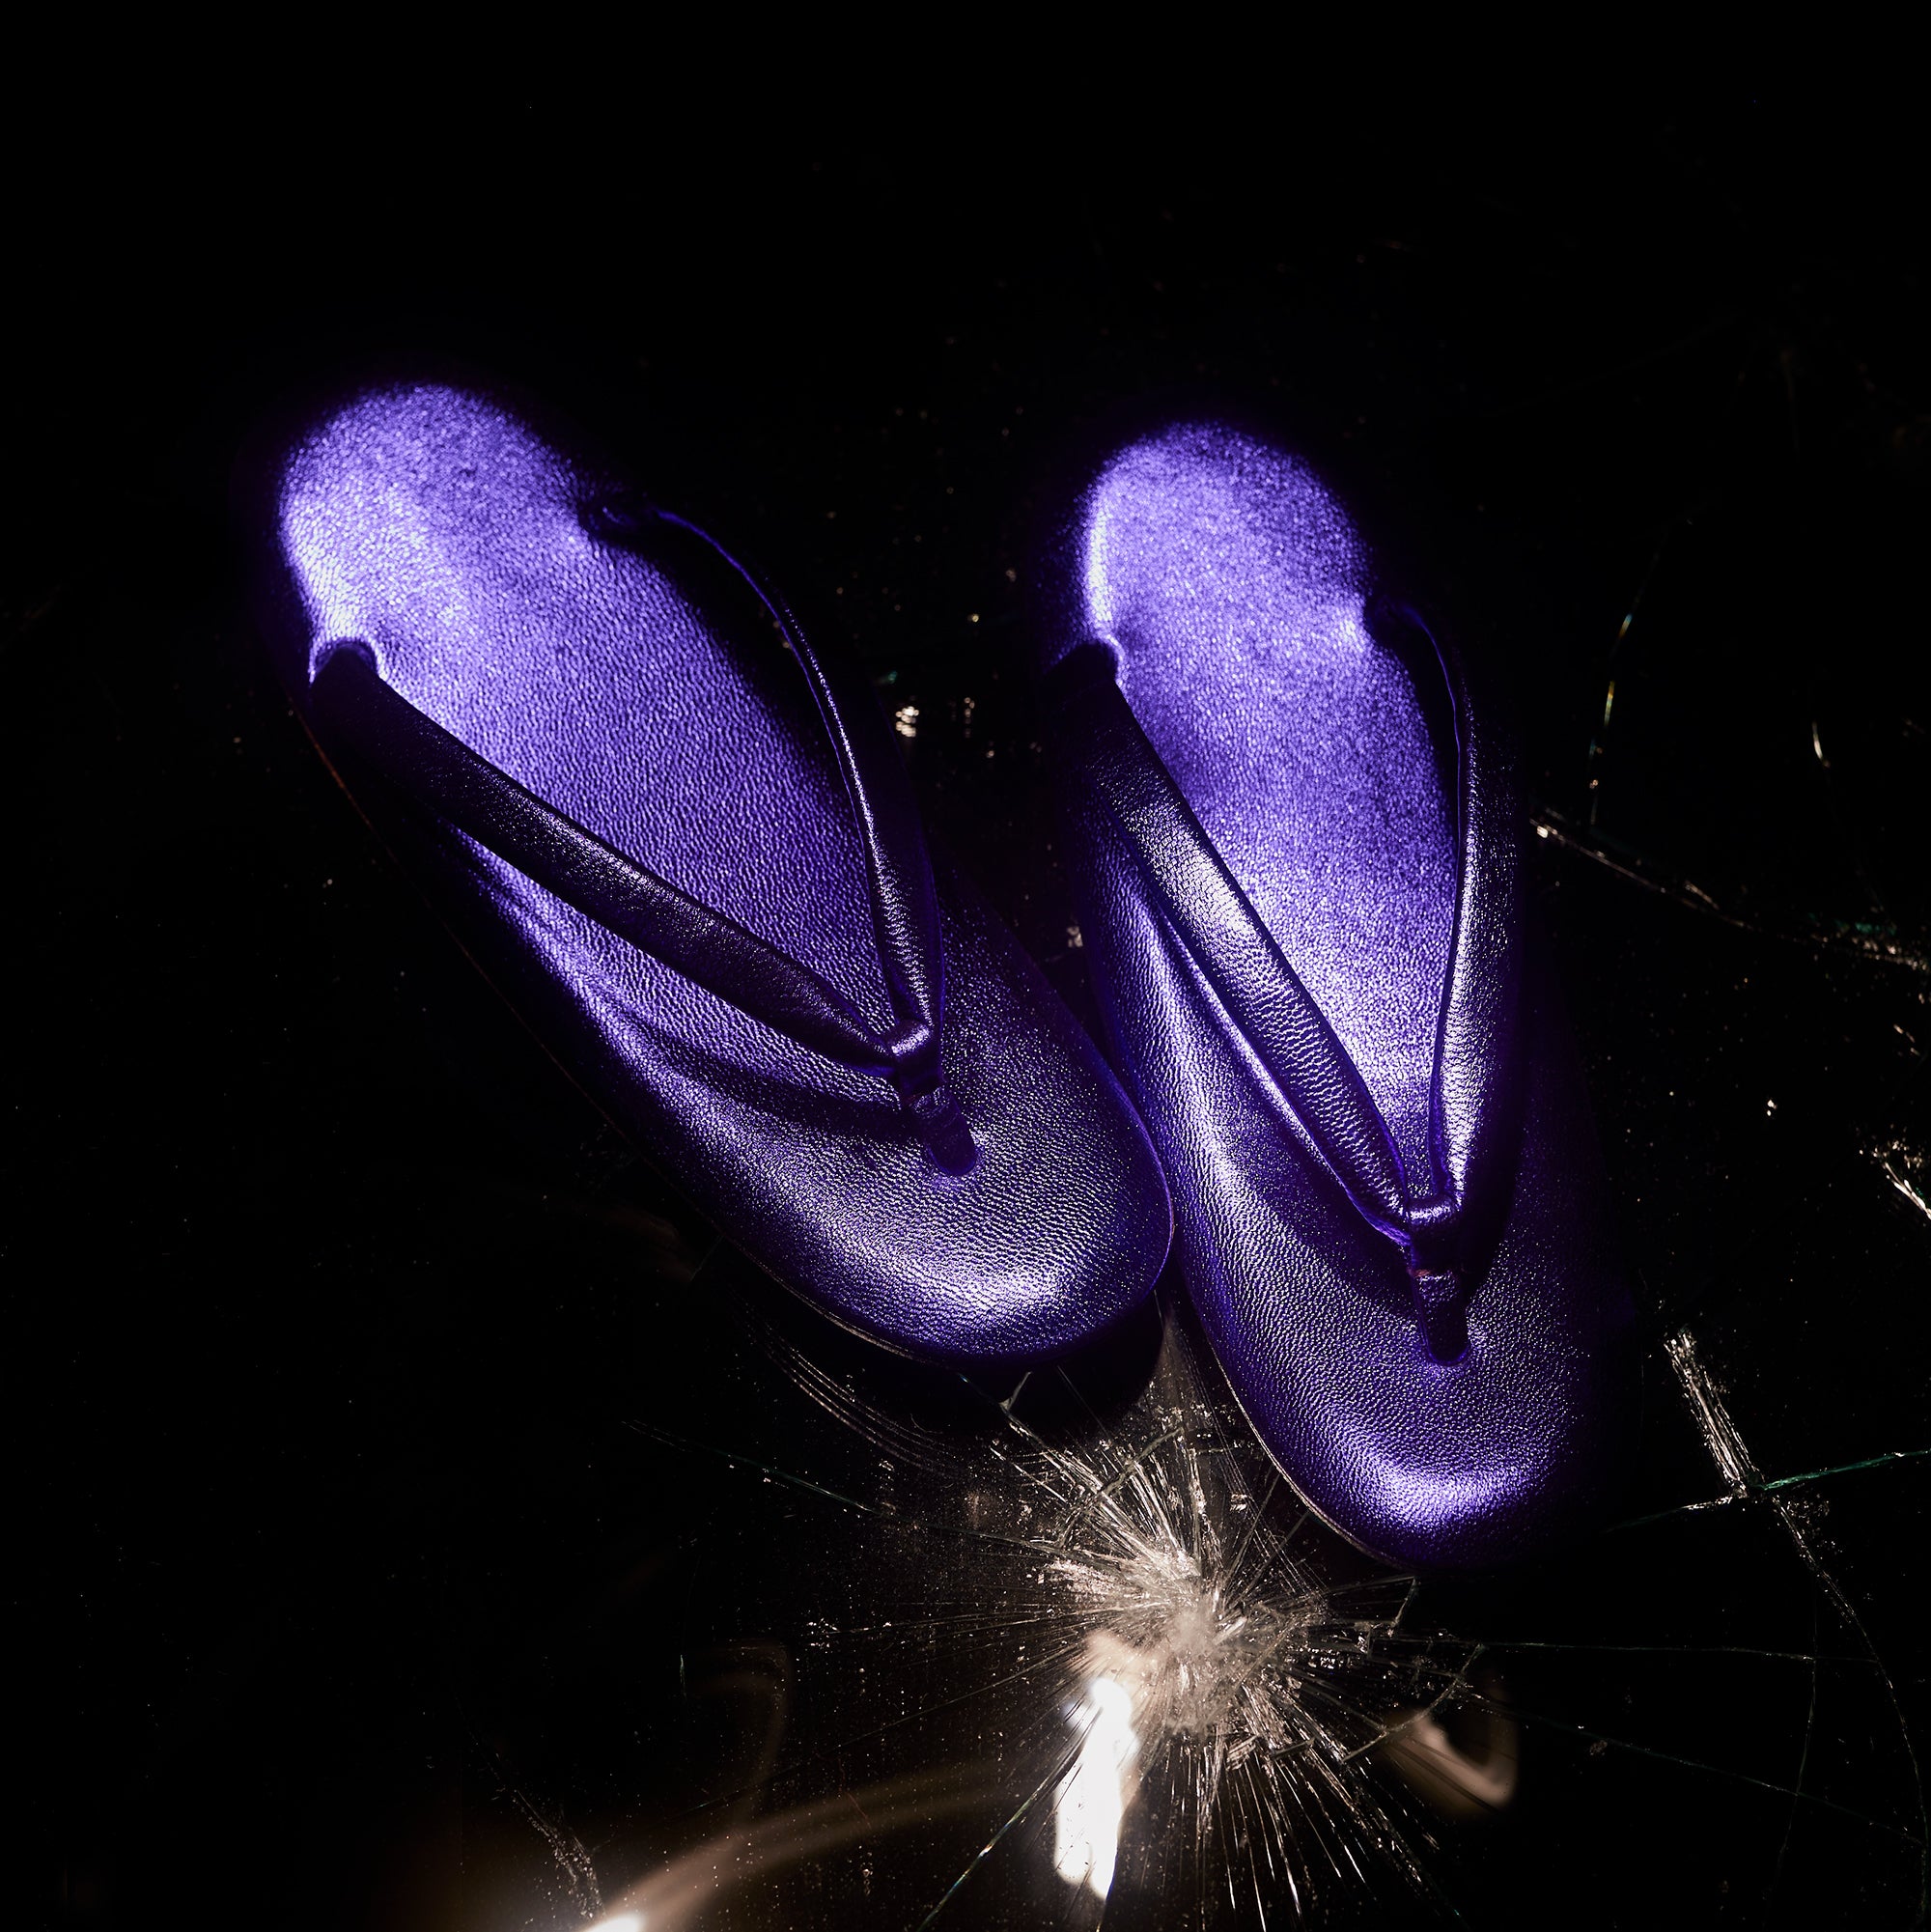 "Underground zori purple"